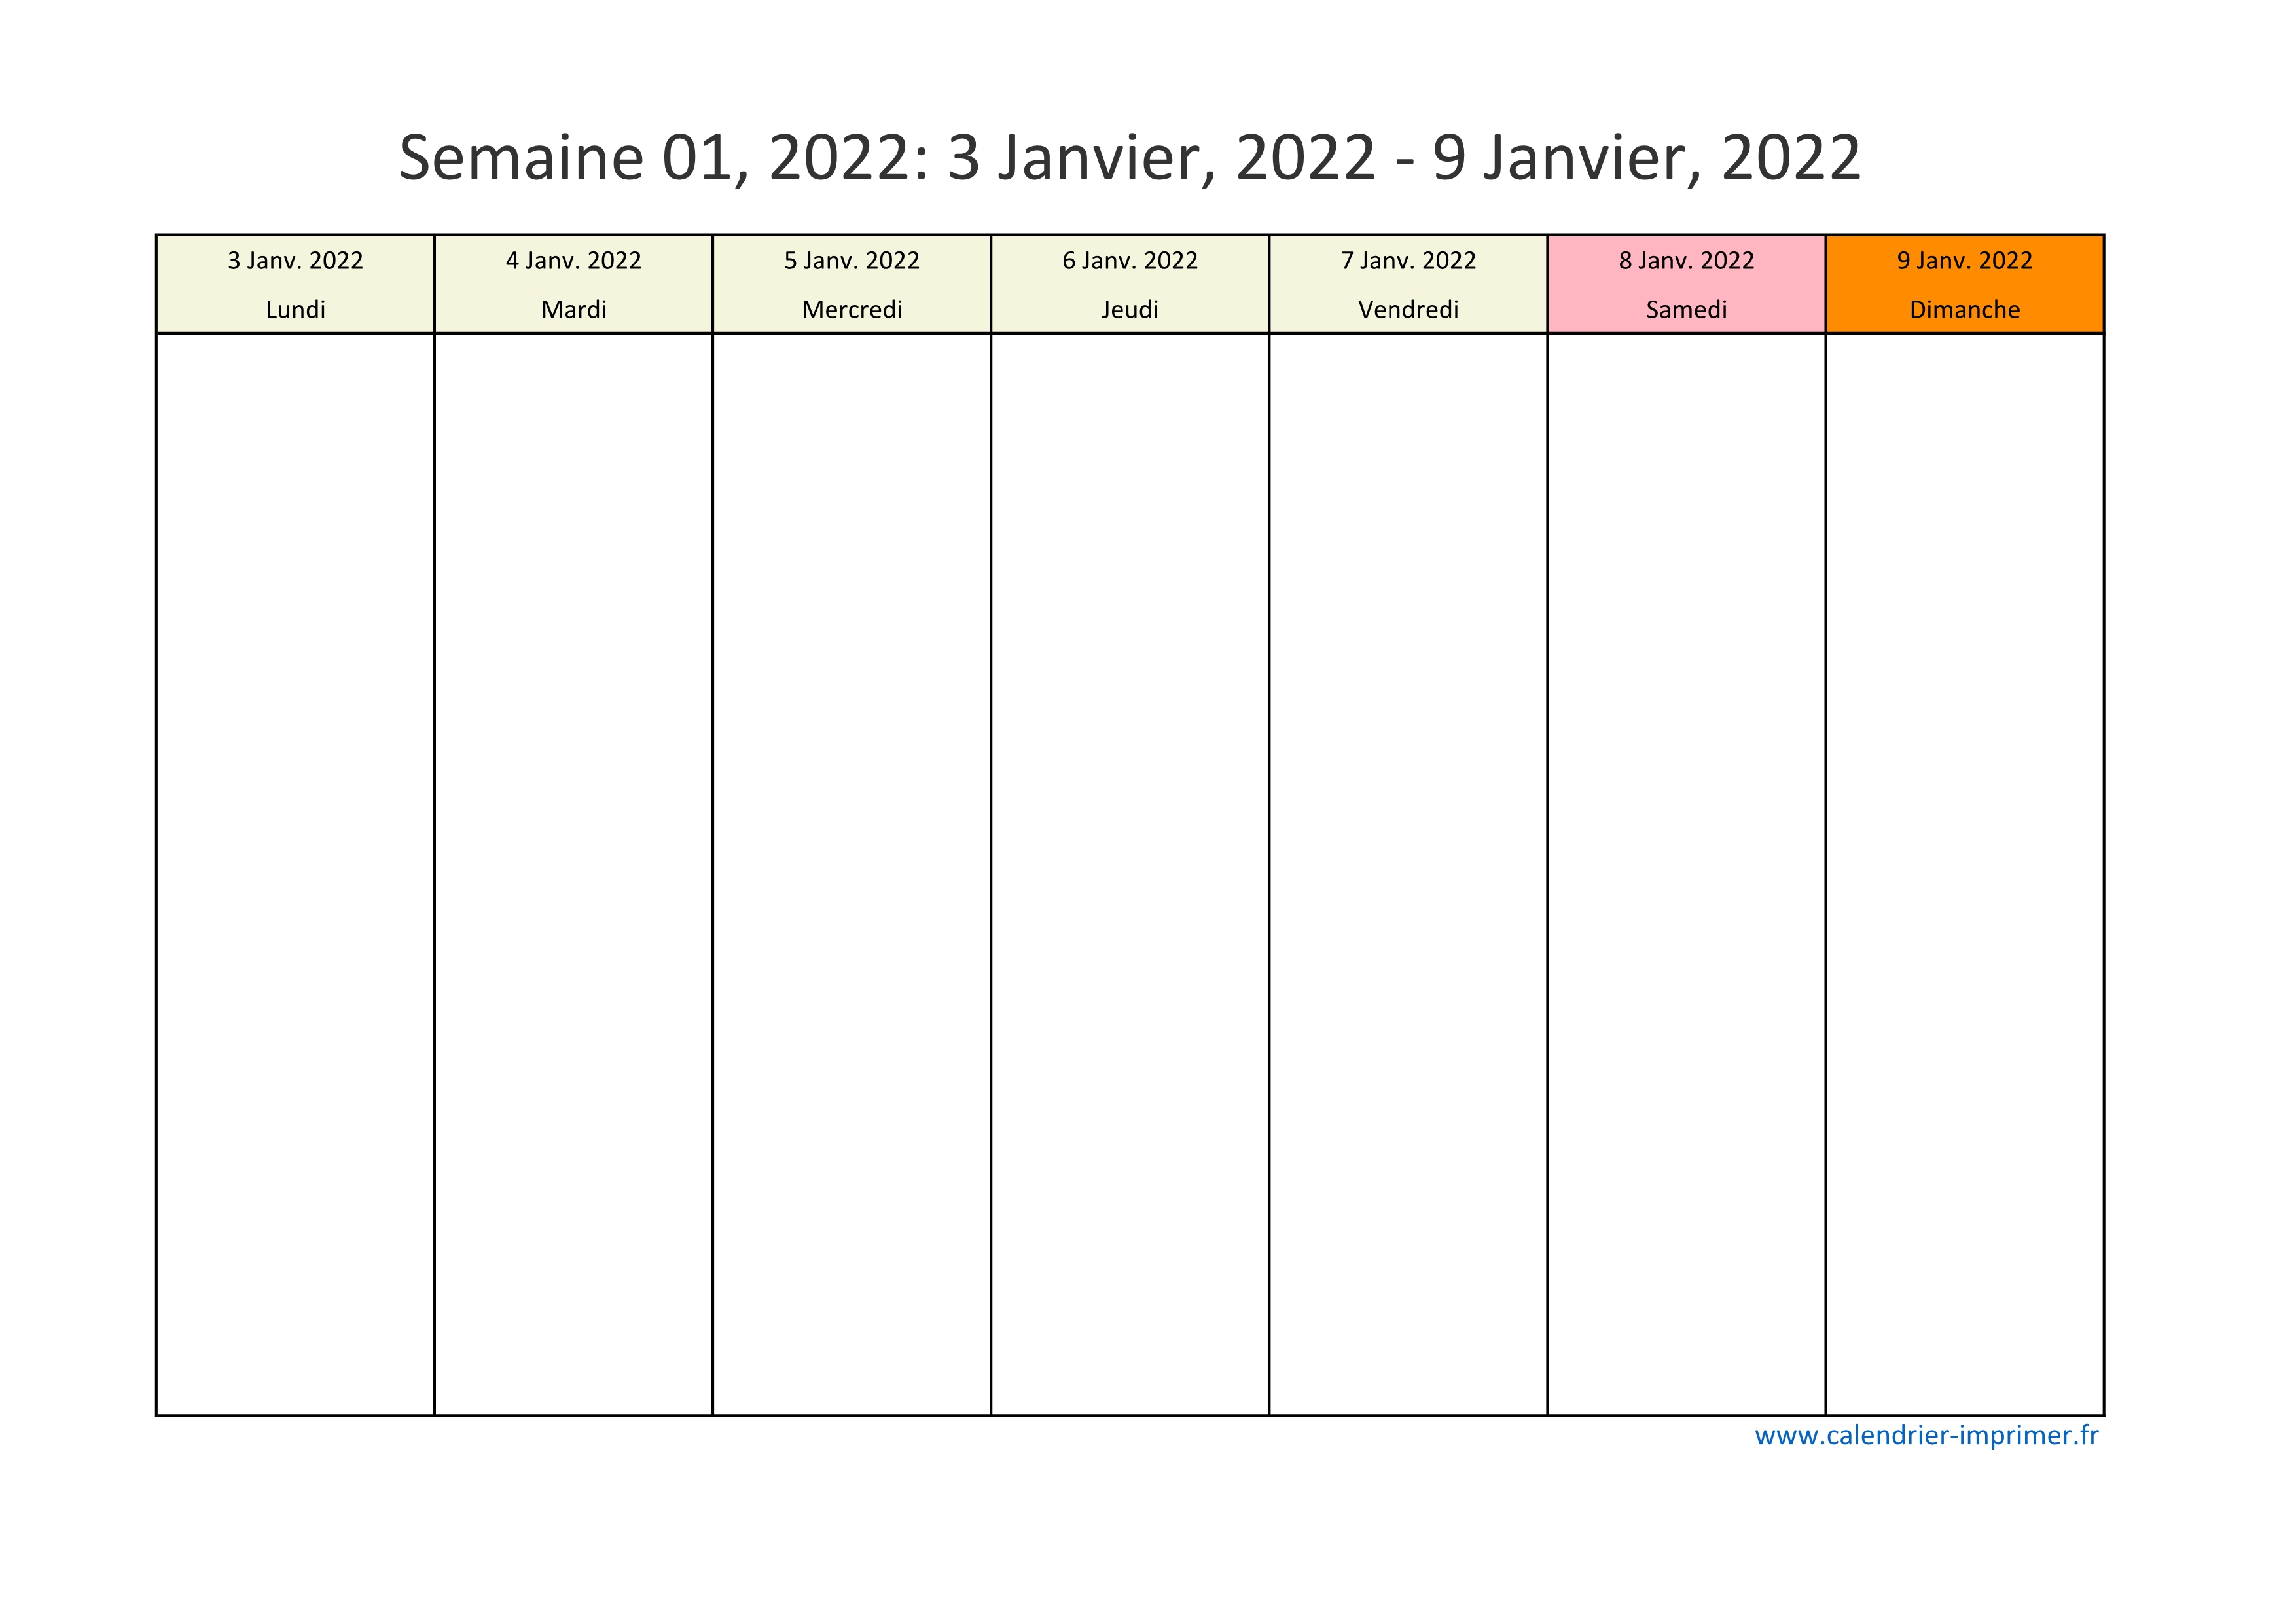 Calendrier 2022 semaine (planning, hebdomadaire, semainier)